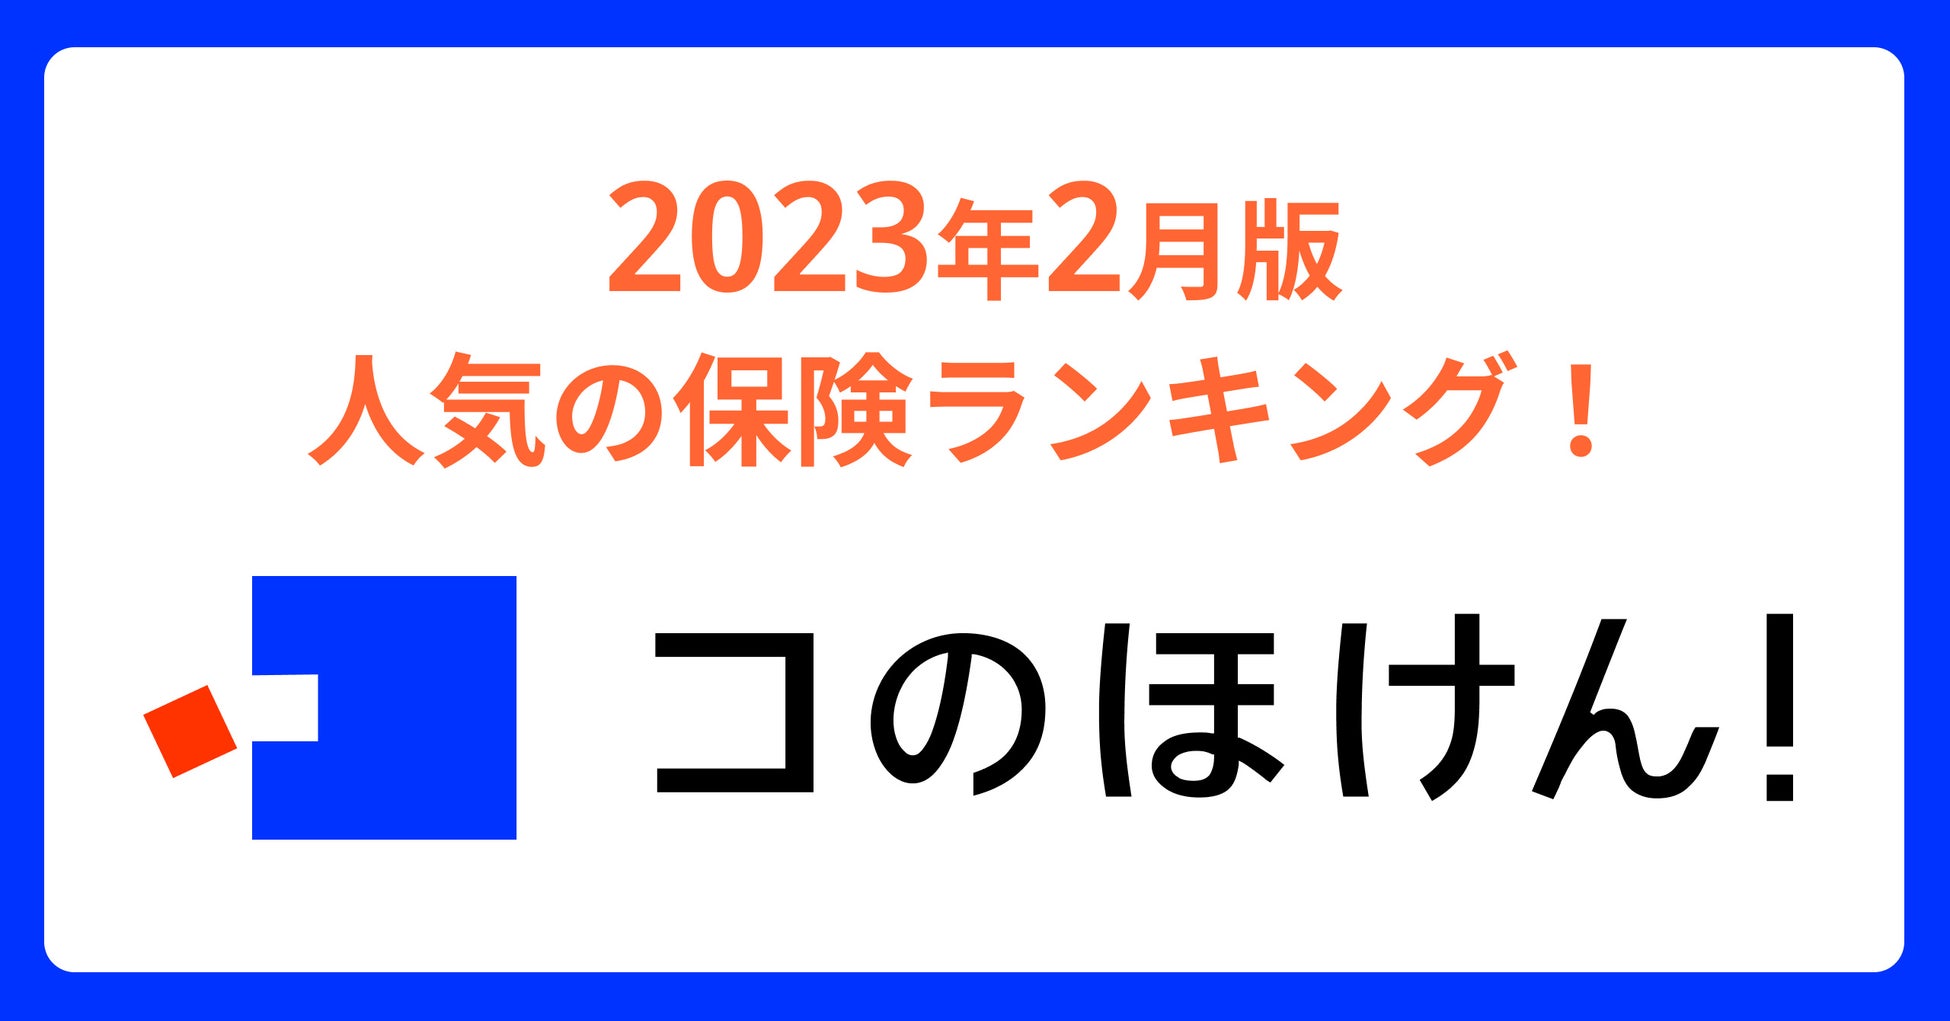 Assurant Japan、2023年版日本における働きがいのある会社ベスト100に選出